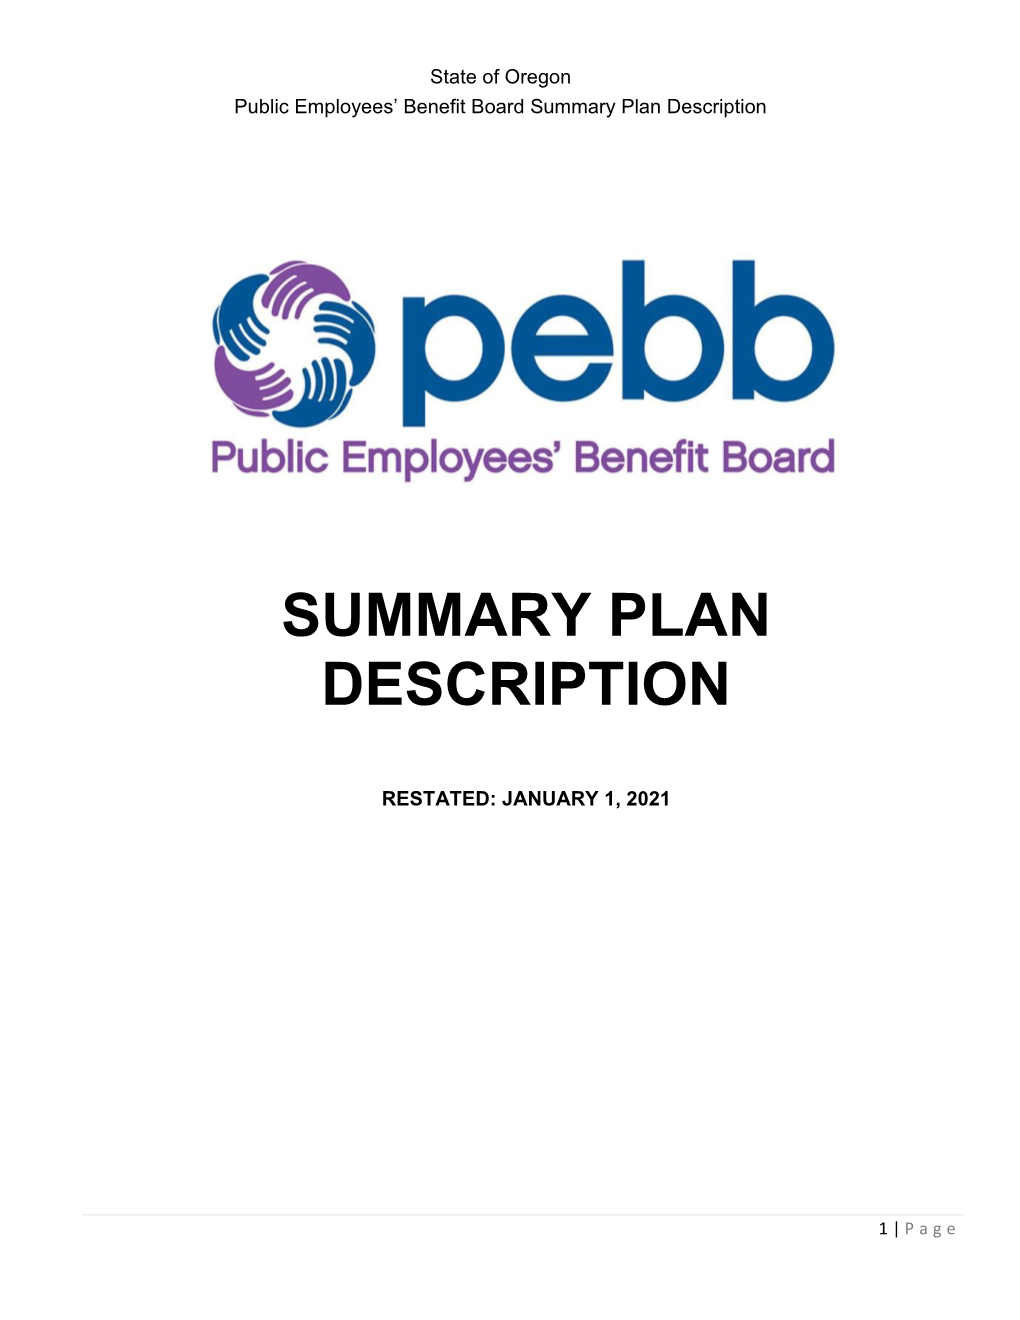 PEBB Summary Plan Description at Contact PEBB at 503-373-1102 the Plan Administrator